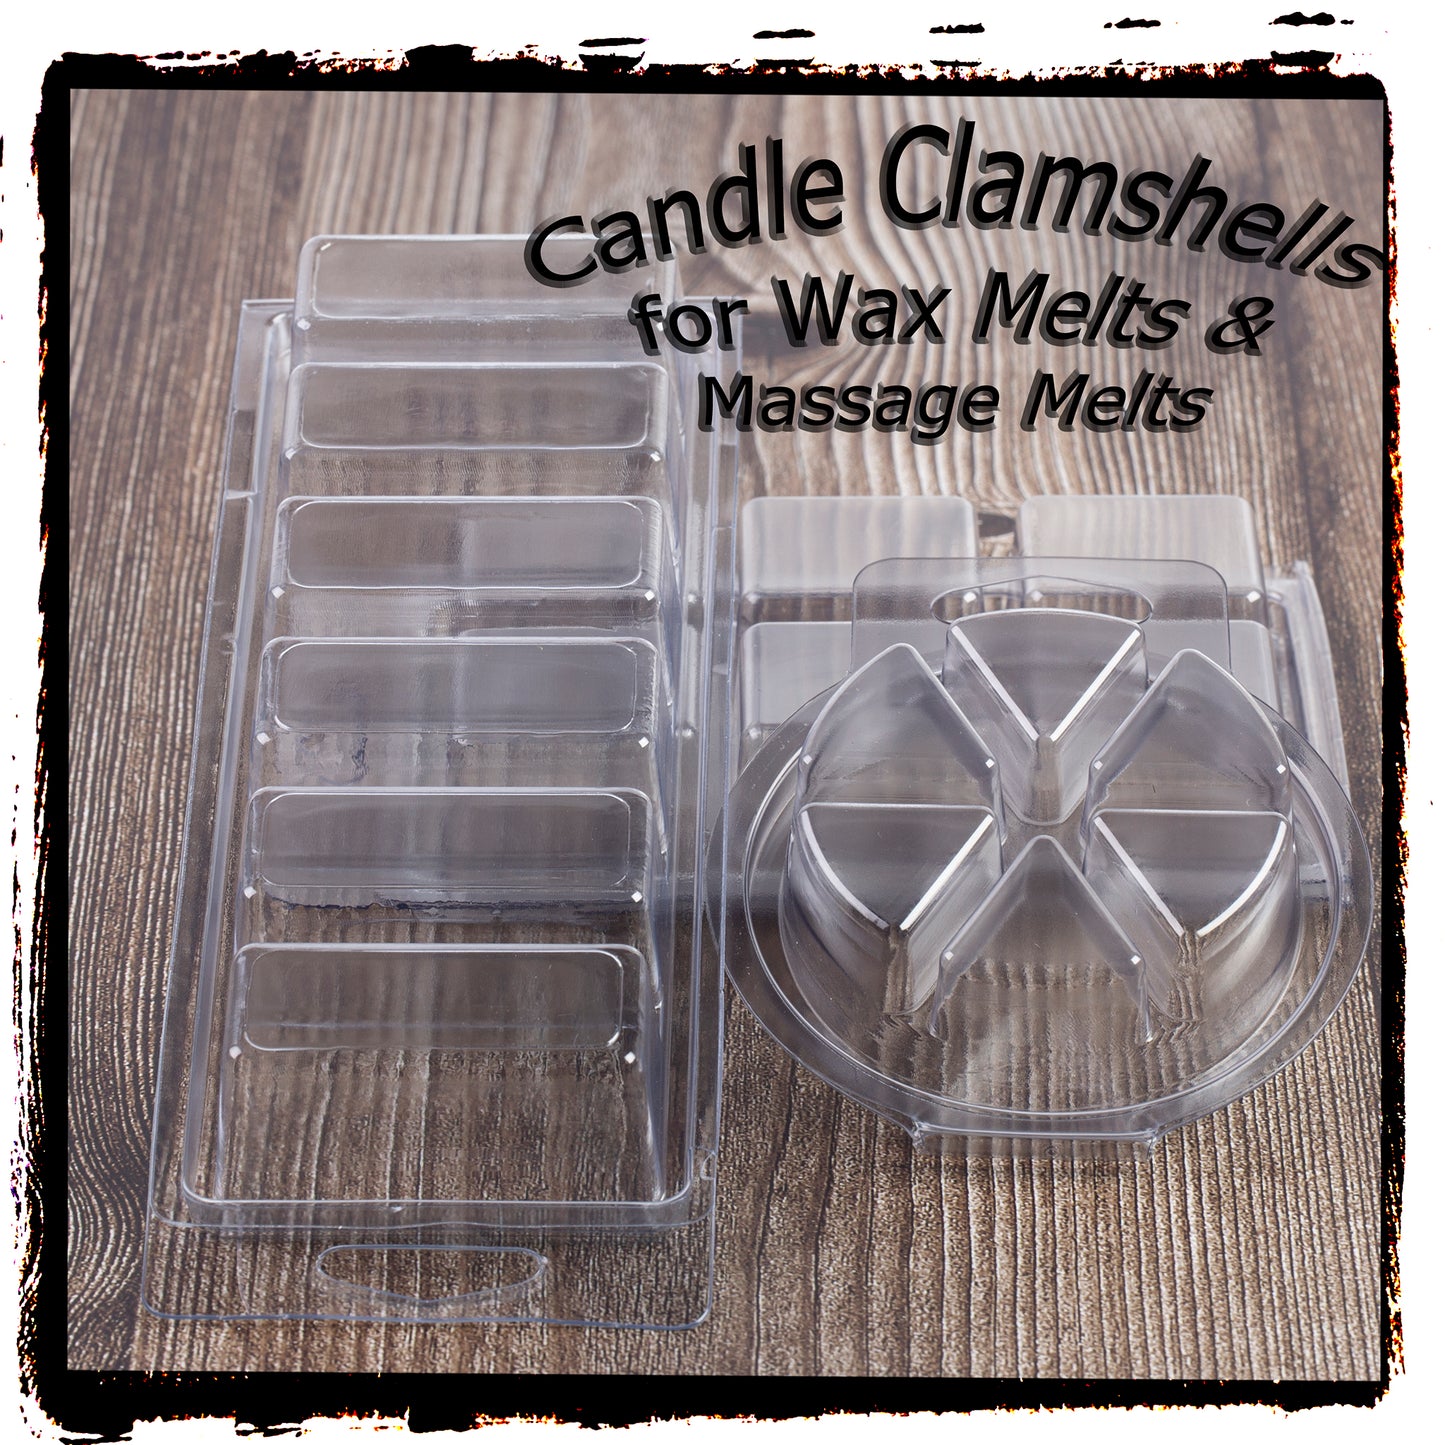 53 Wax melt molds clamshells ideas